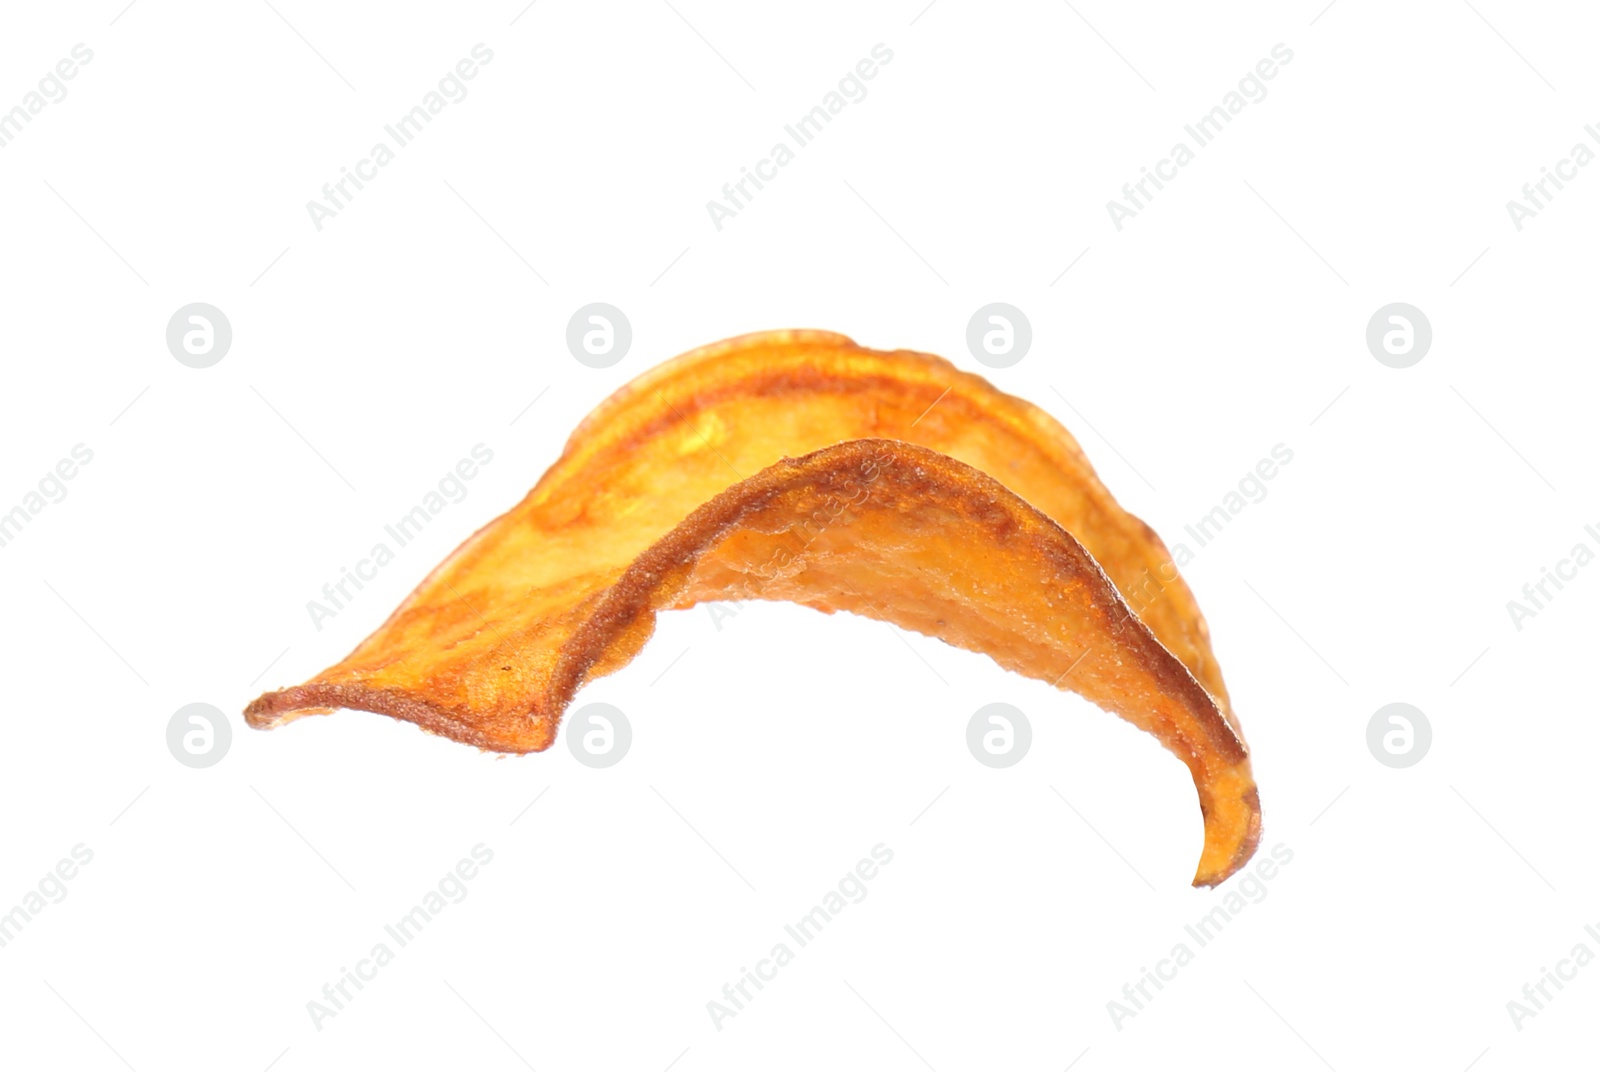 Photo of Tasty sweet potato chip isolated on white